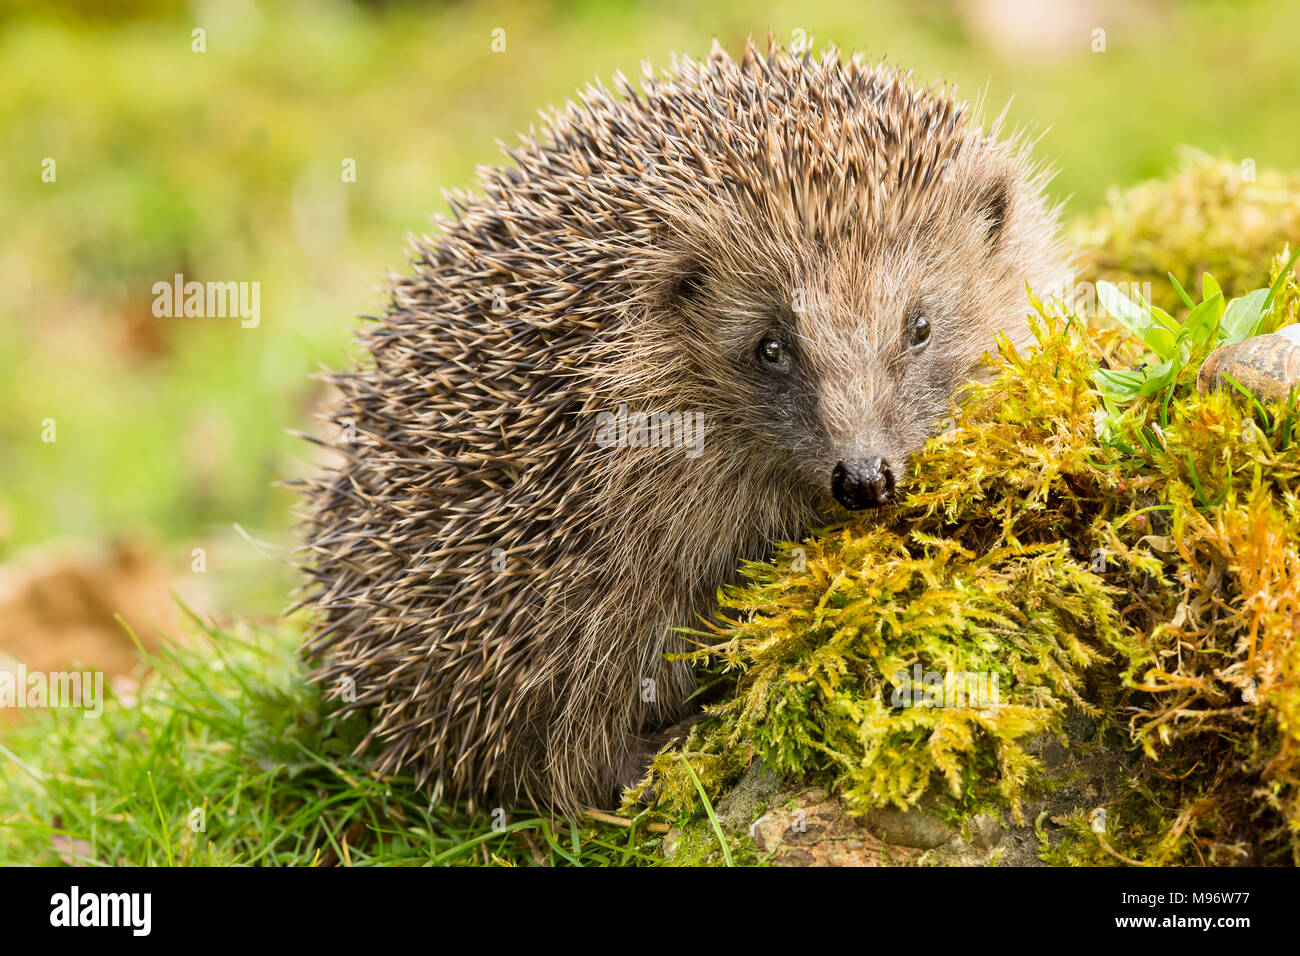 Hedgehog, wild, native, European hedgehog on green moss with blurred background.  Erinaceus europaeus.  Landscape. Stock Photo